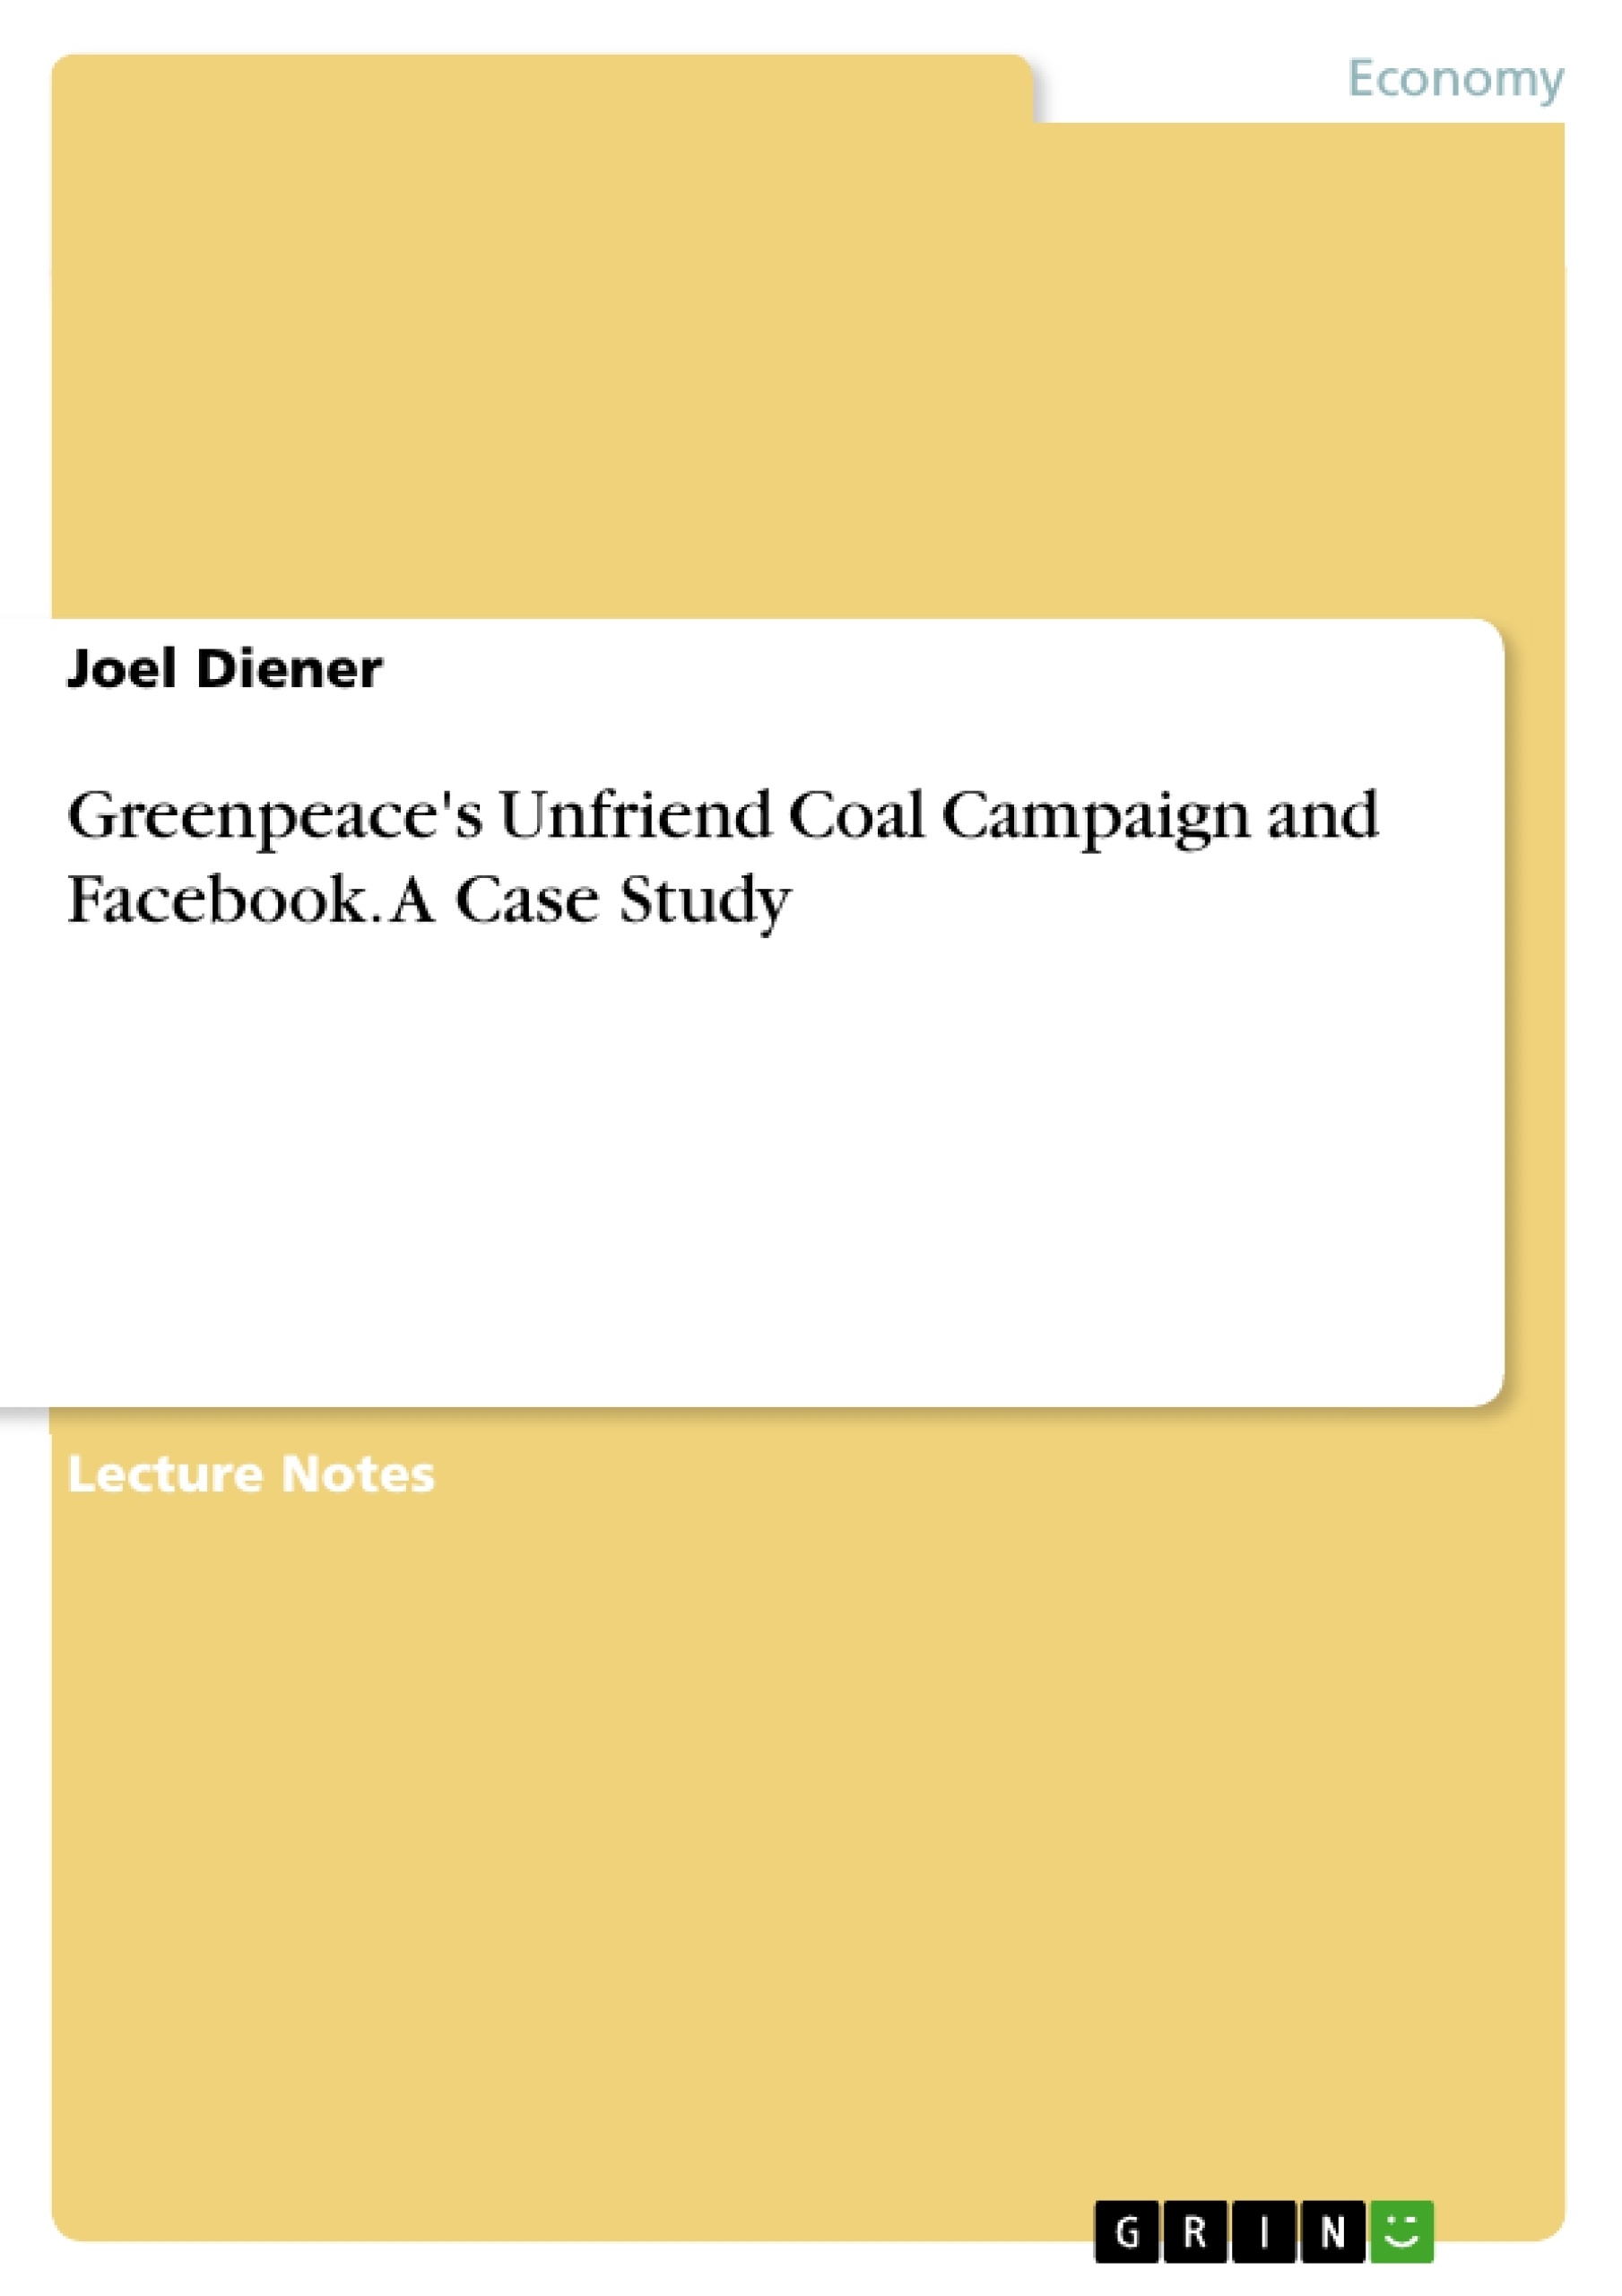 Title: Greenpeace's Unfriend Coal Campaign and Facebook. A Case Study